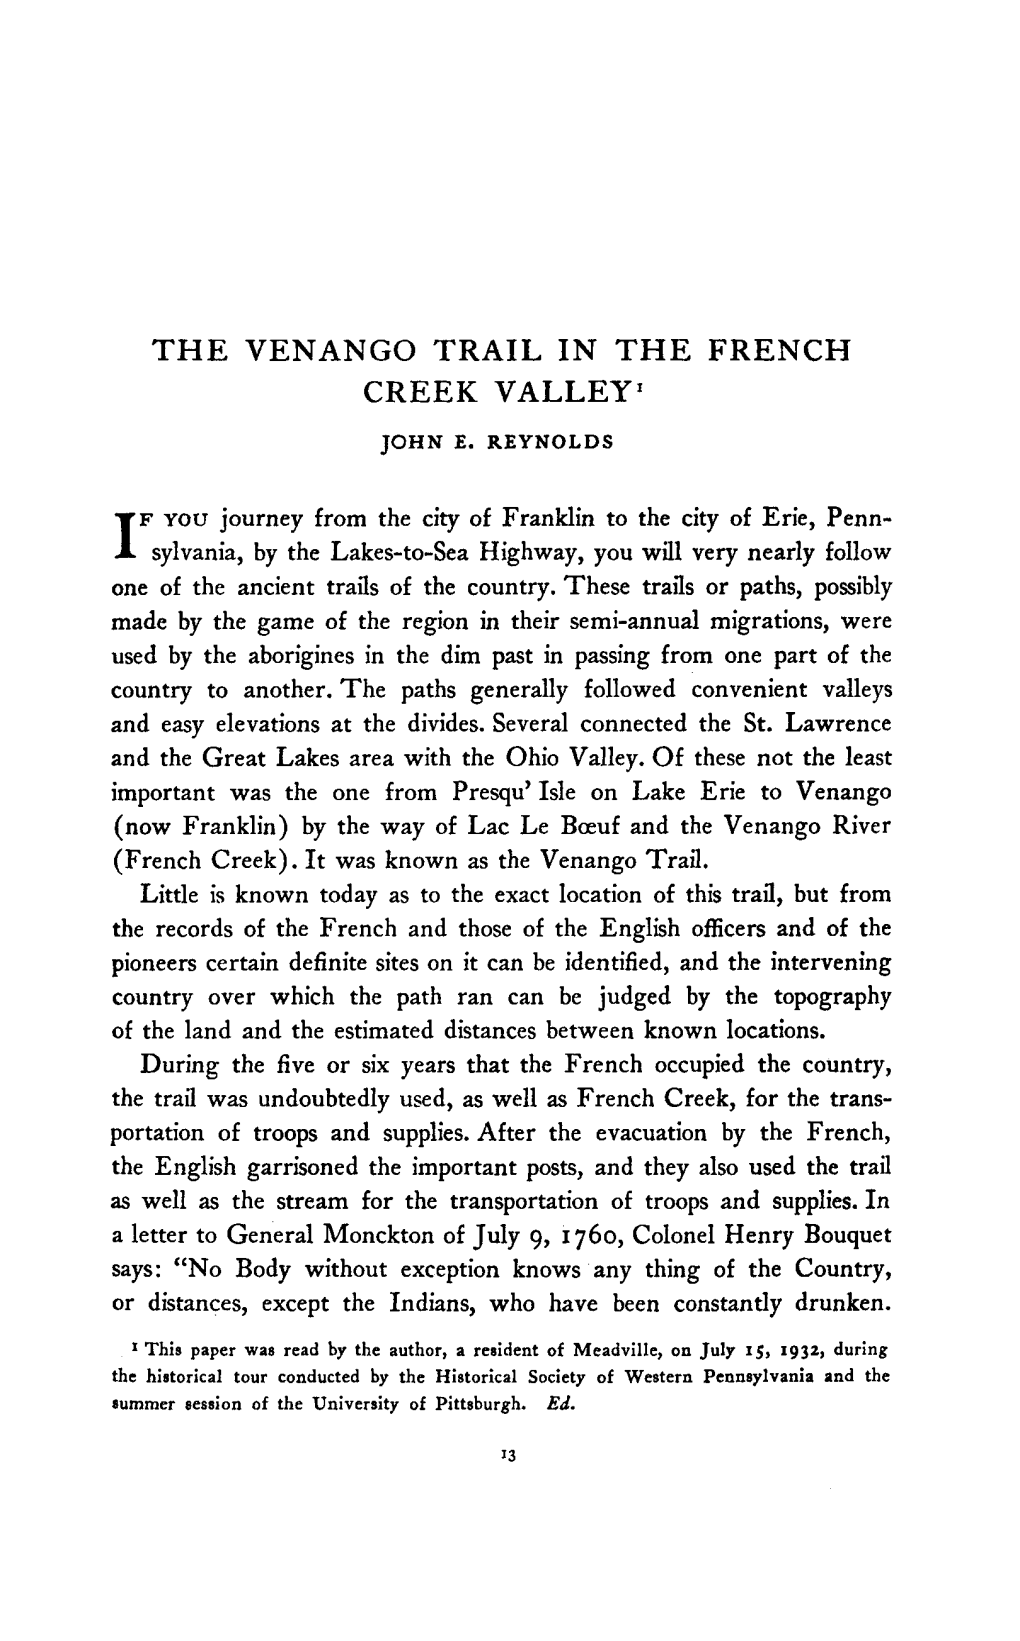 The Venango Trailin the French